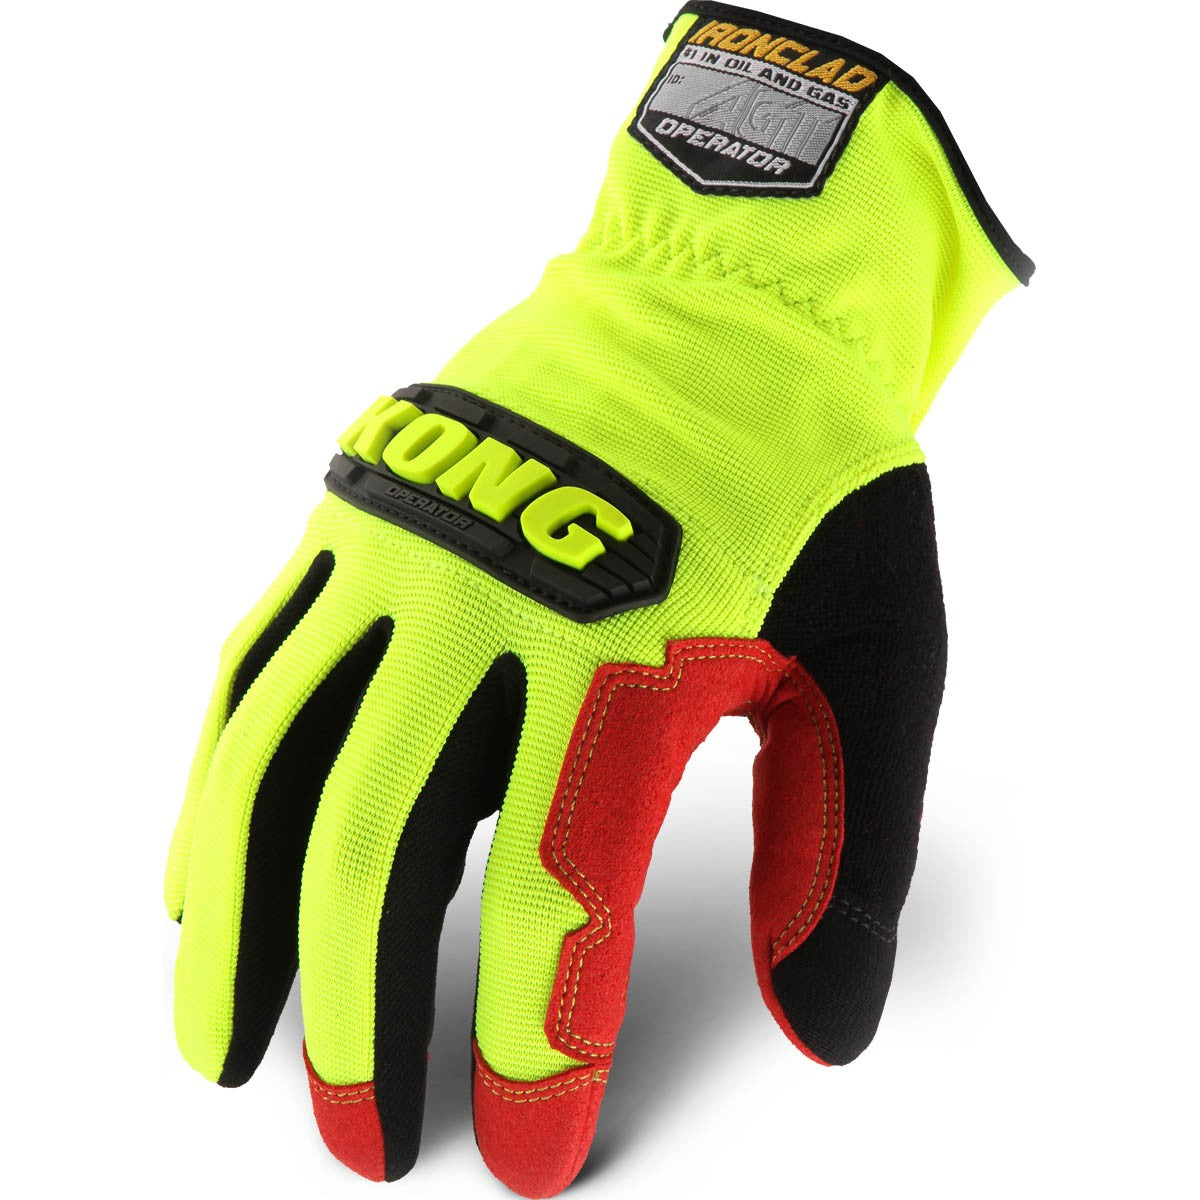 Ironclad KOPR Kong Operator Work Gloves